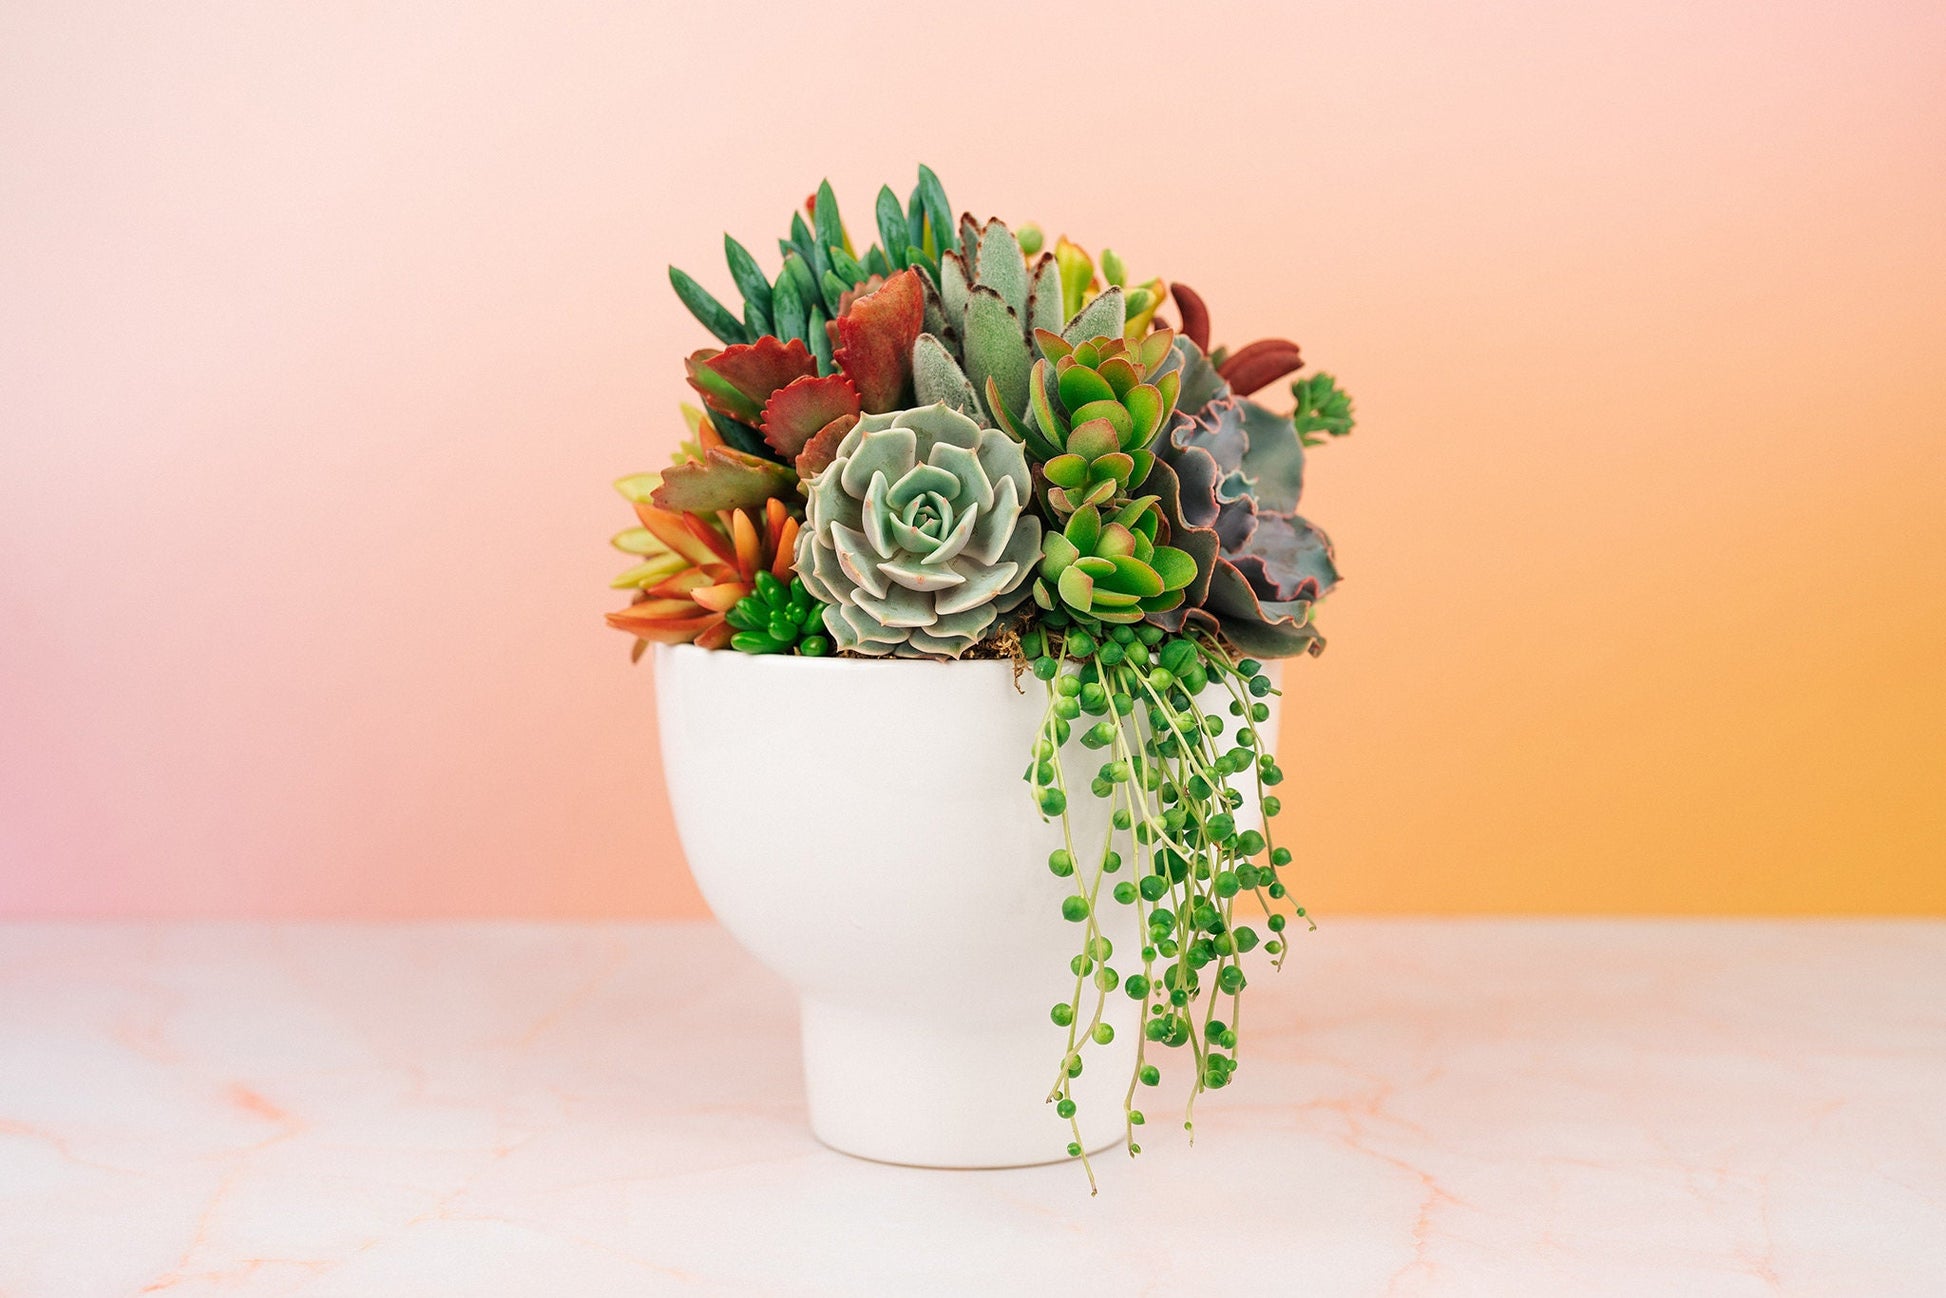 White Compote Ceramic Succulent Arrangement Planter: Modern Living Succulent Gift or Centerpiece for Weddings & Events